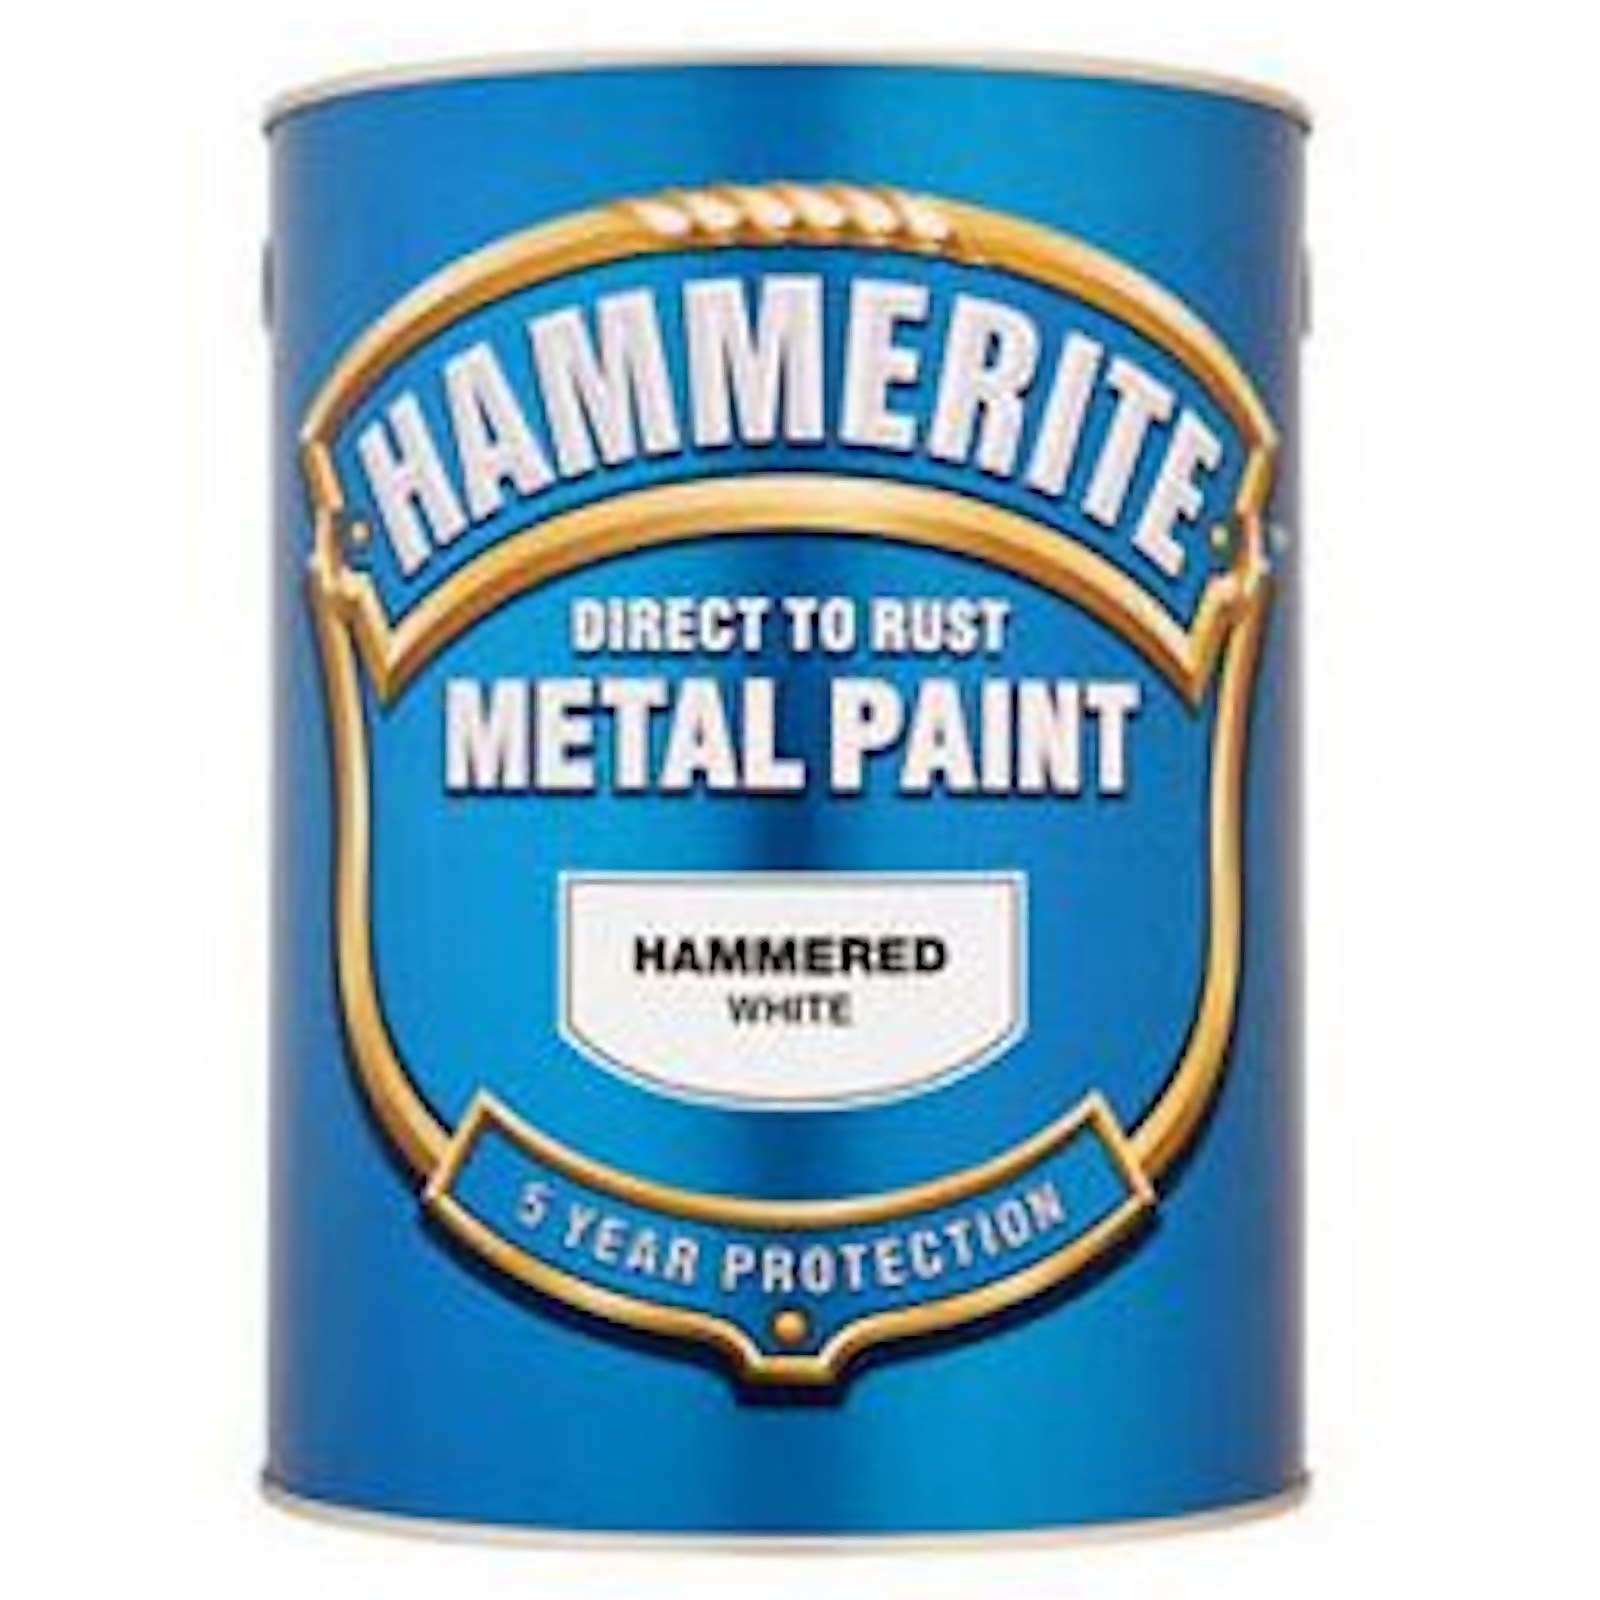 Hammerite Direct to Rust Metal Paint Hammered White - 250ml